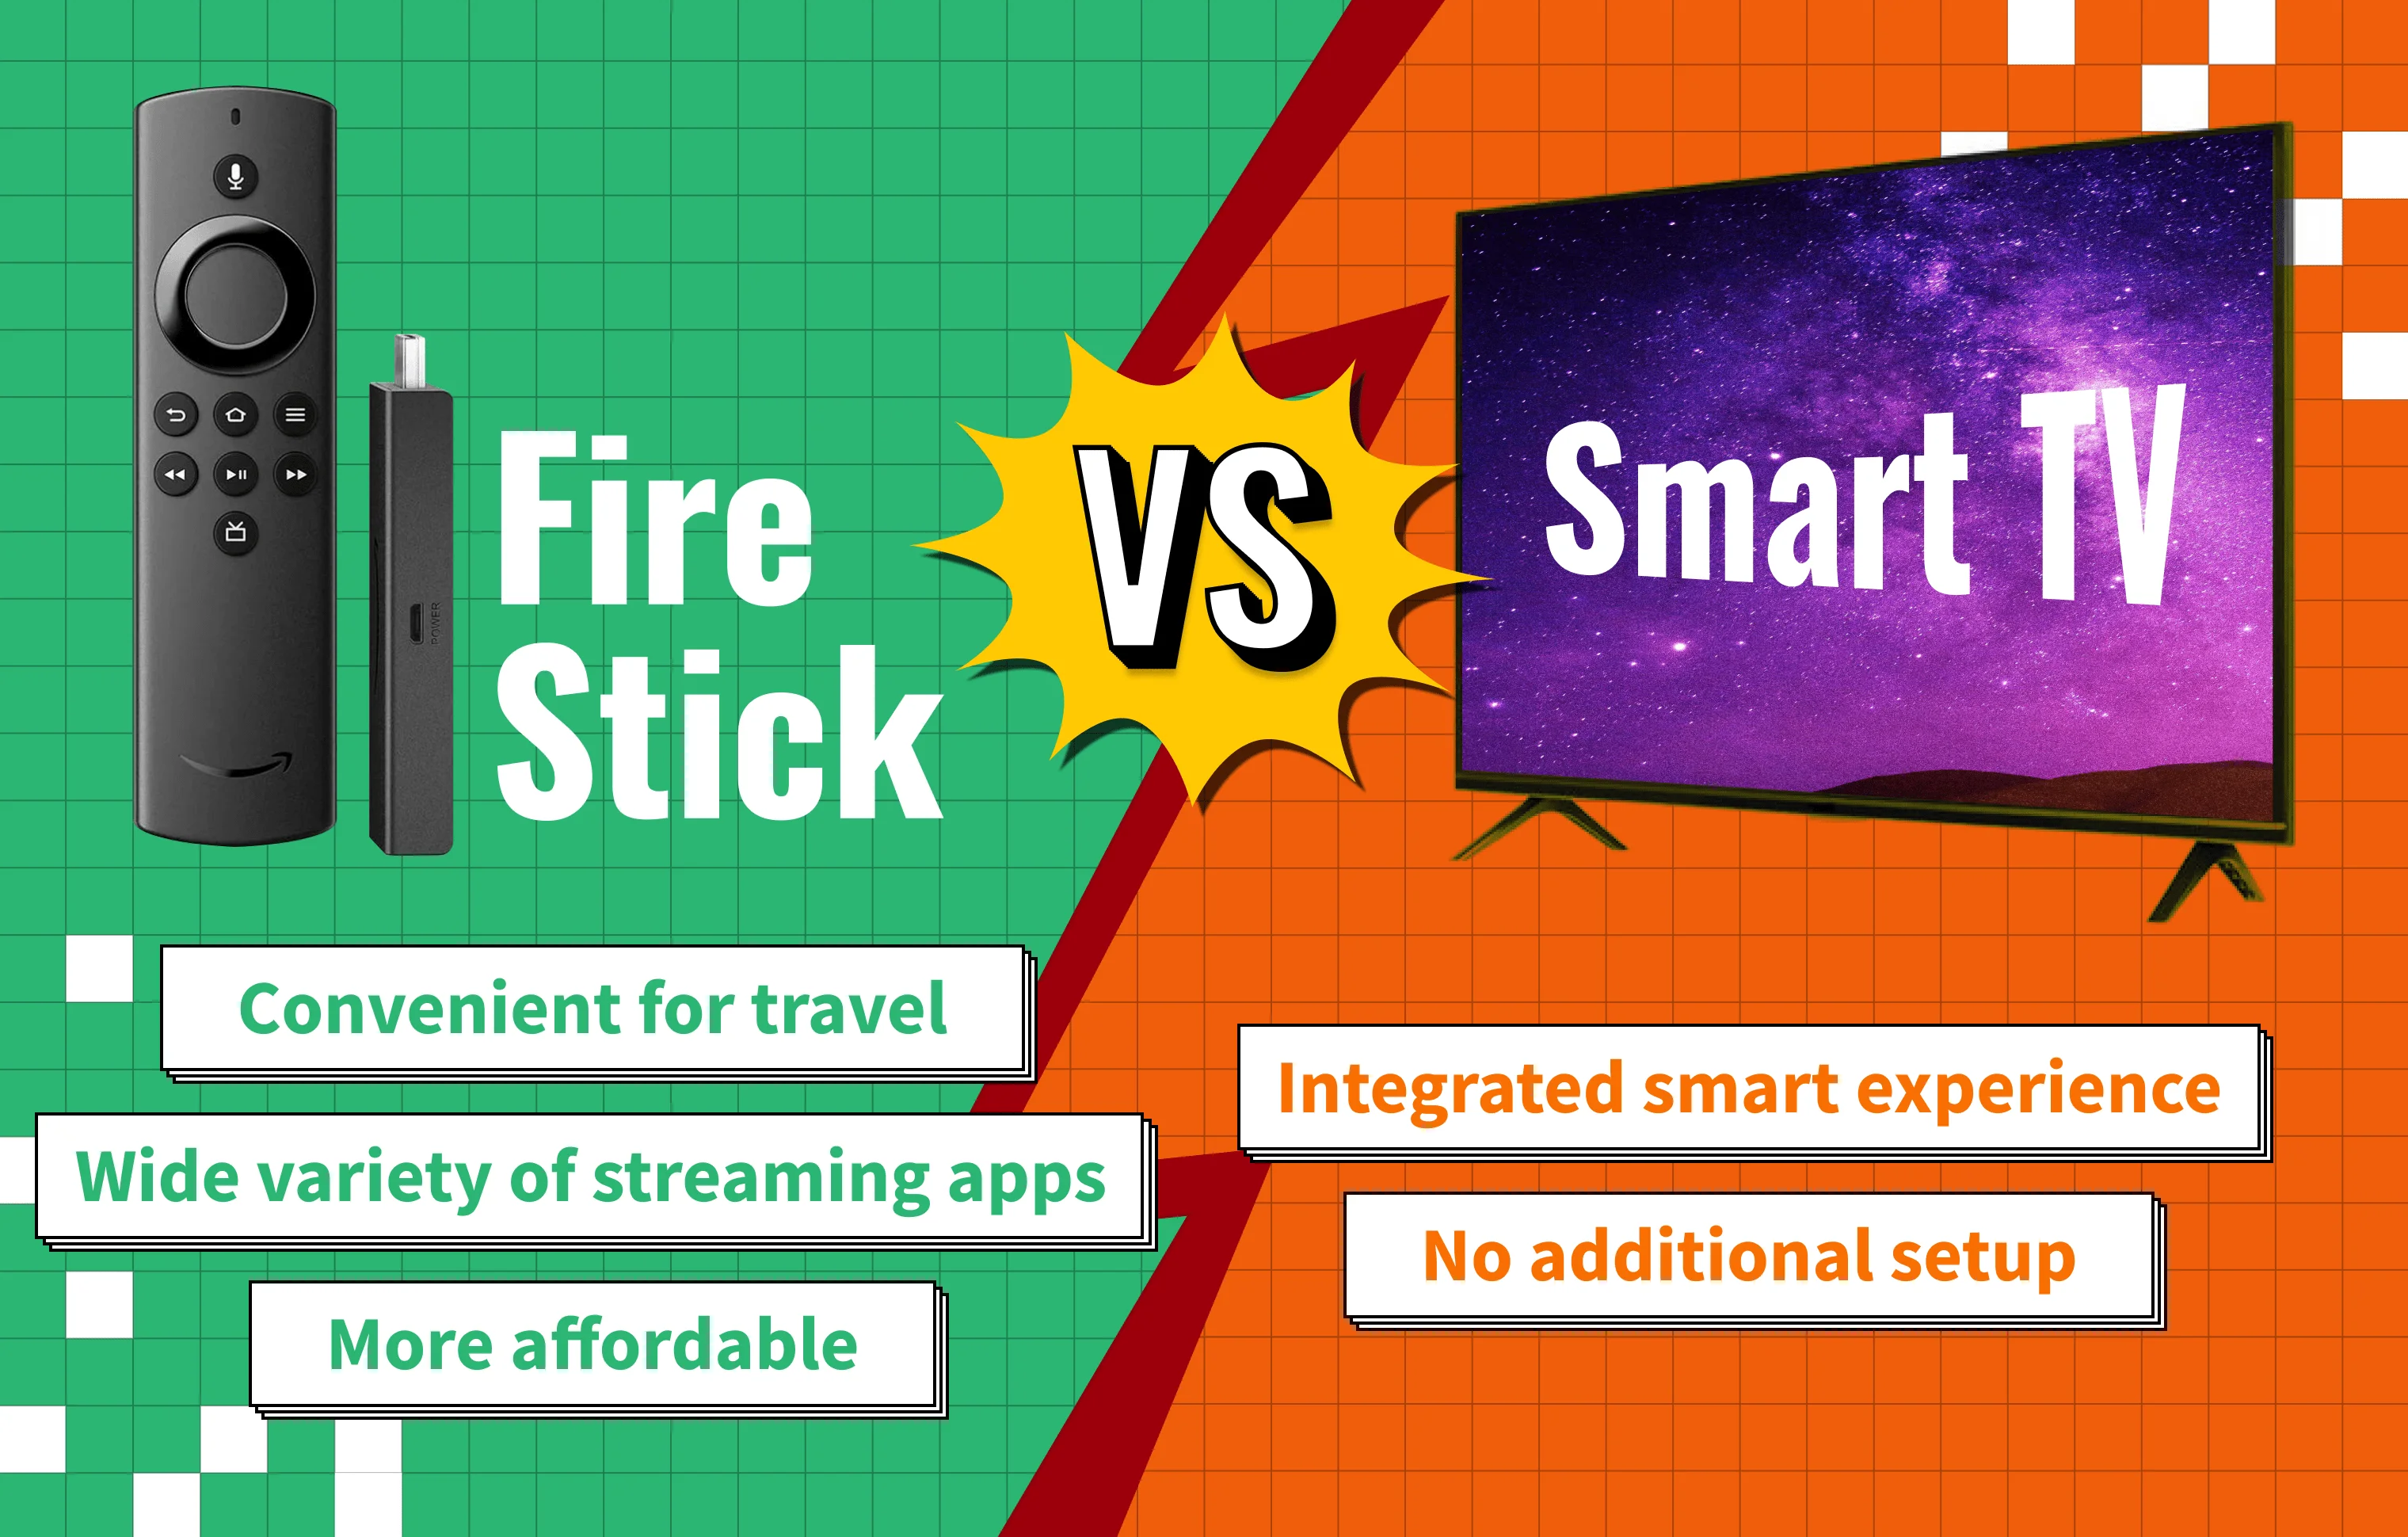 Fire Stick vs Smart TV